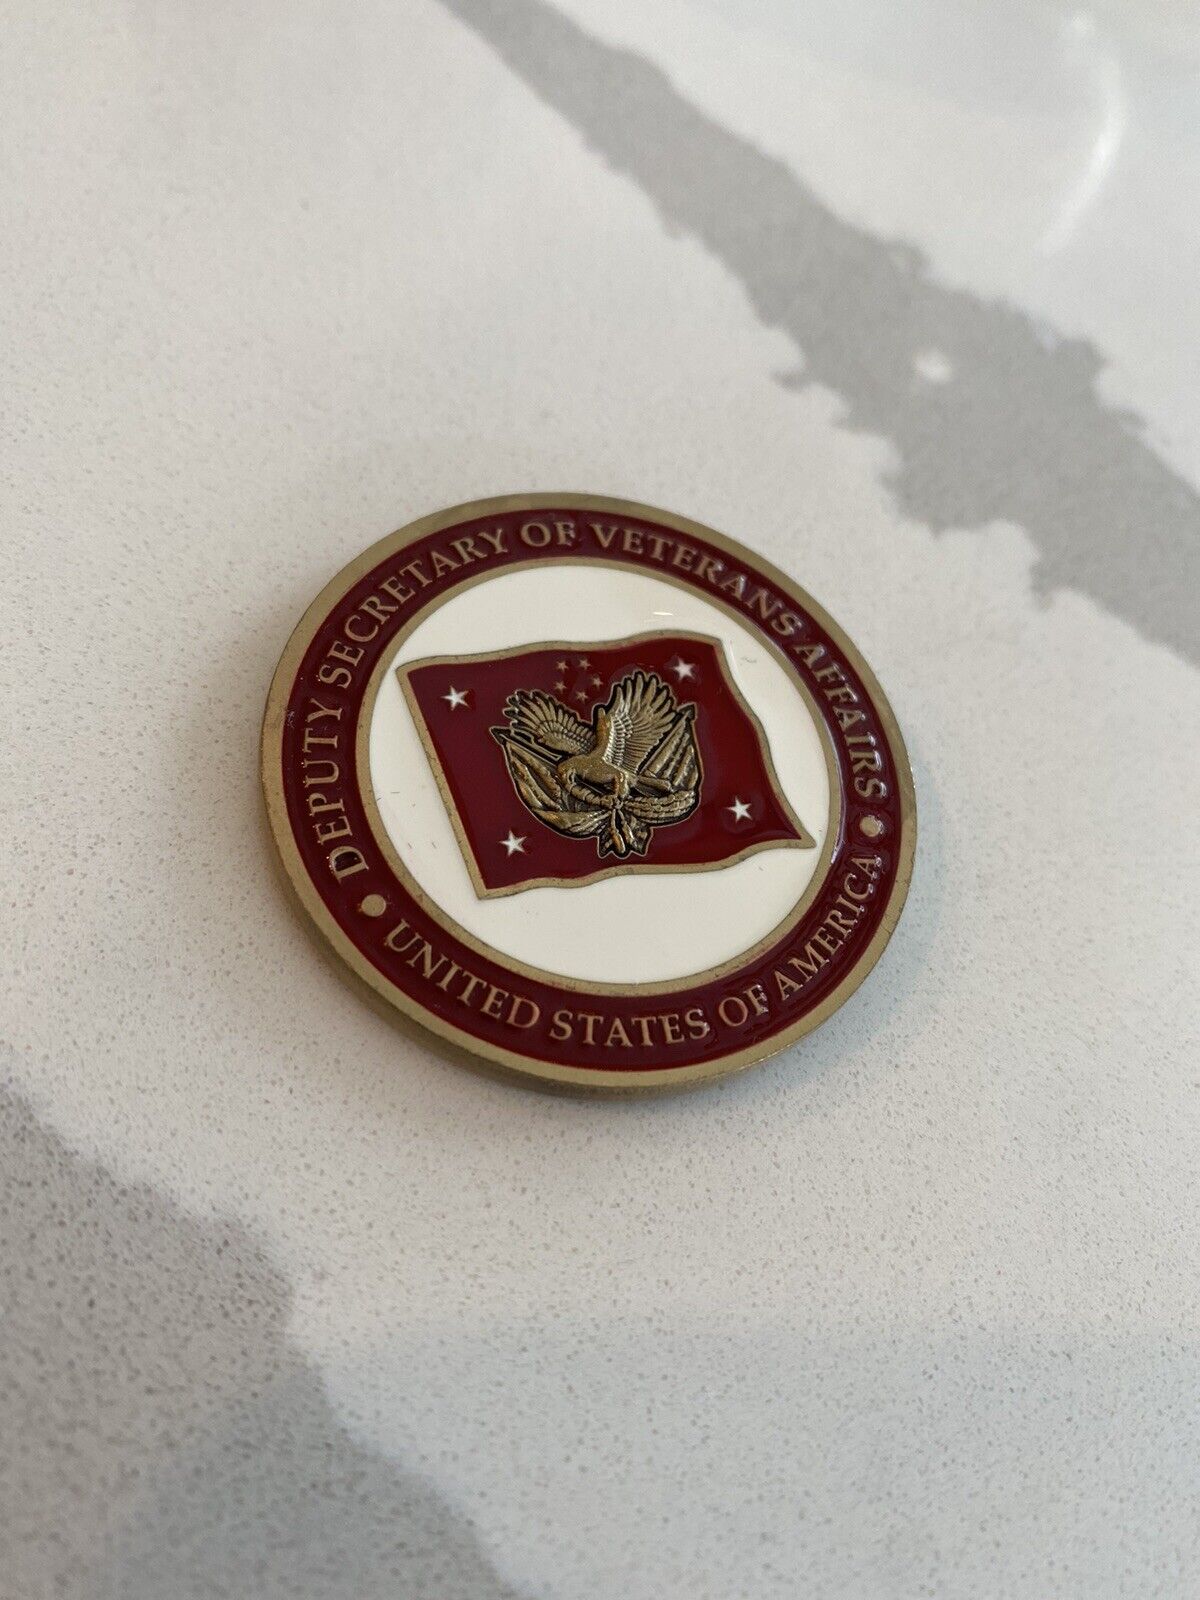 US Deputy VA Secretary Challenge Coin (Authentic)